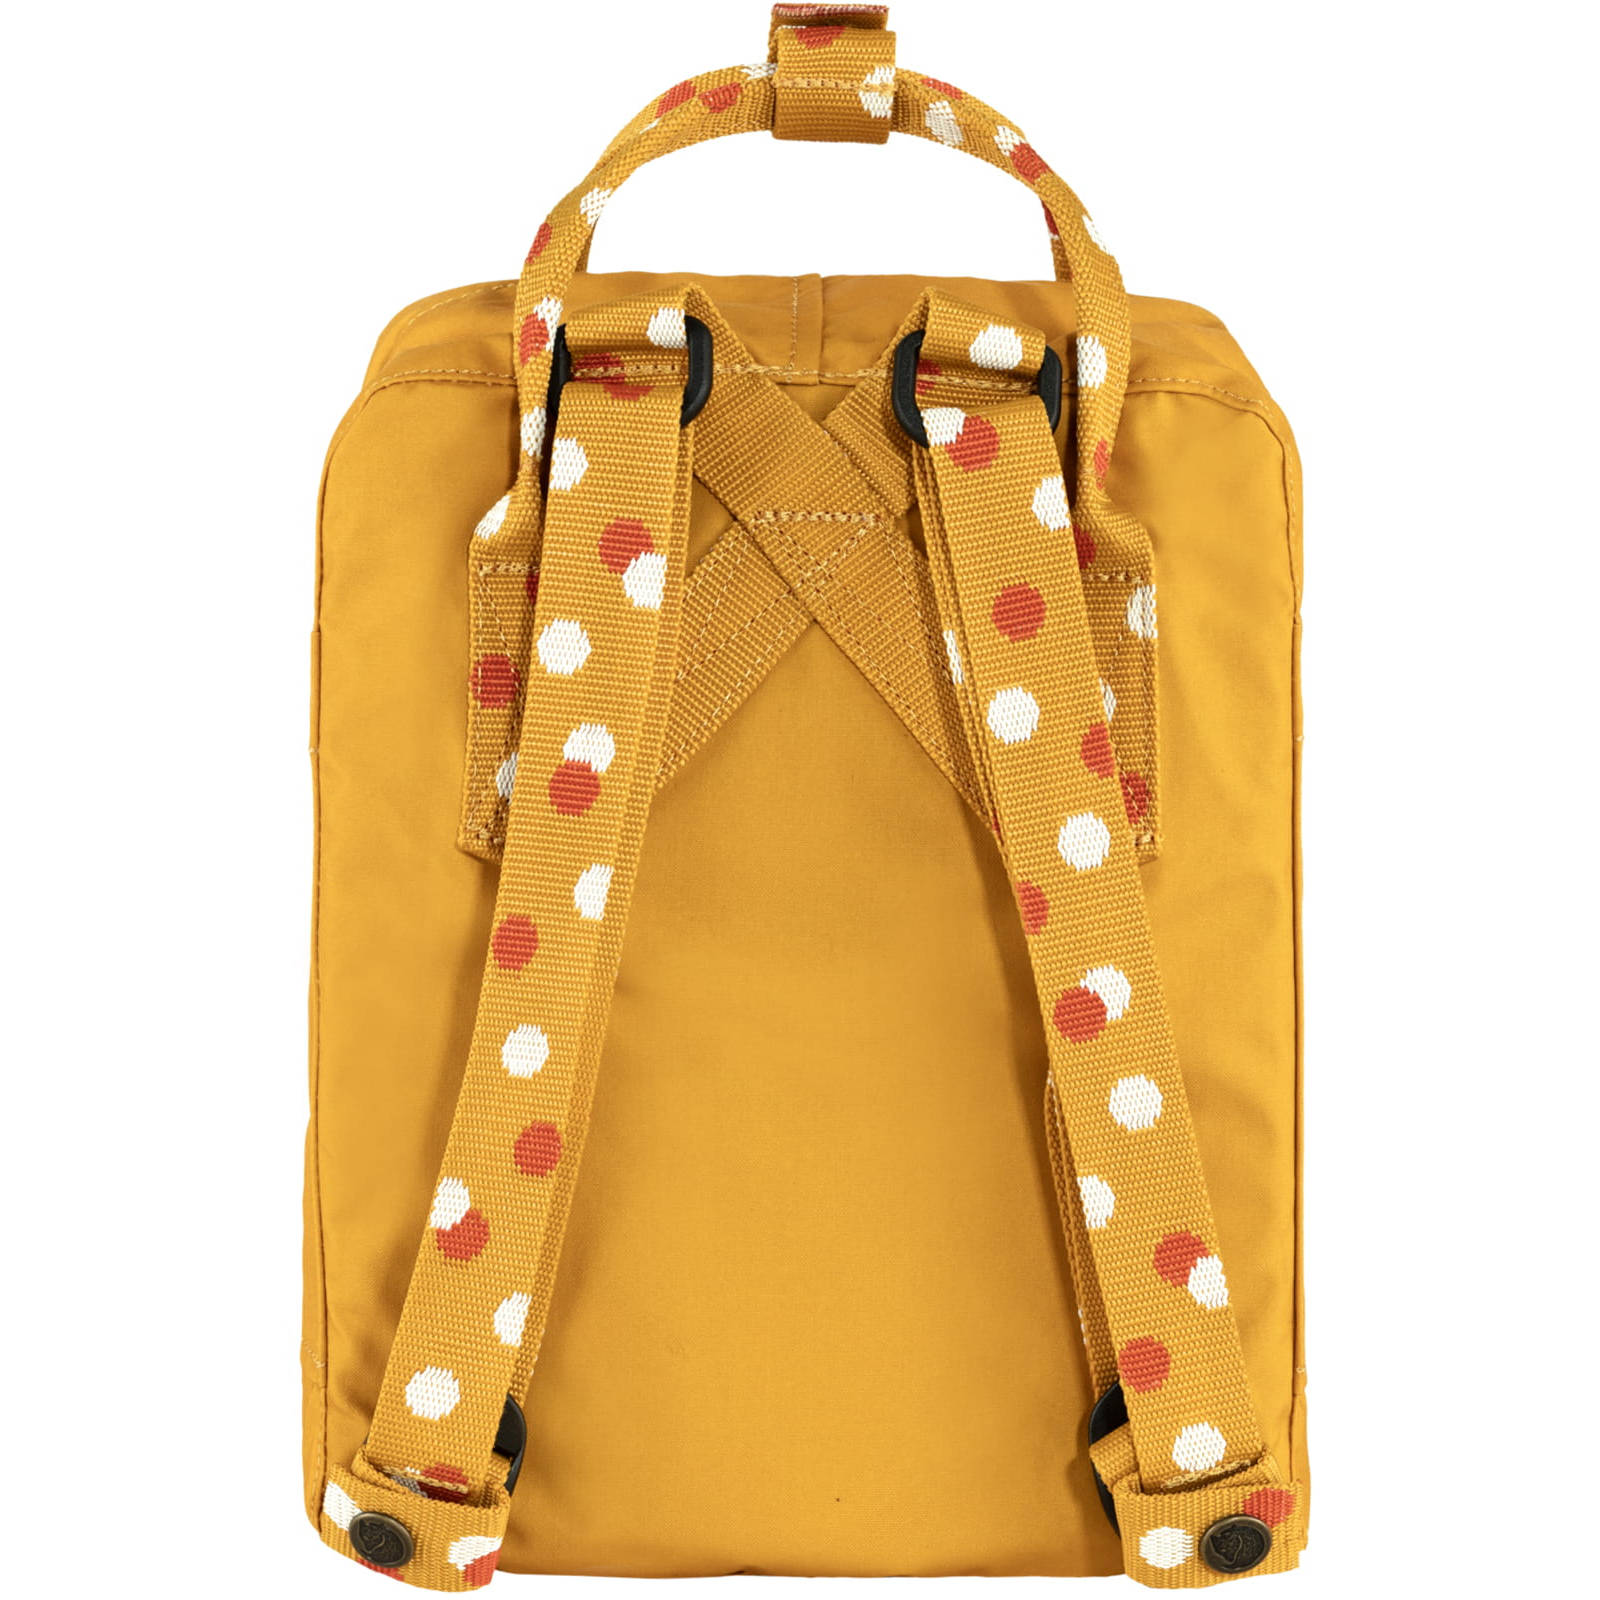 Fjallraven backpack Kanken Mini yellow color